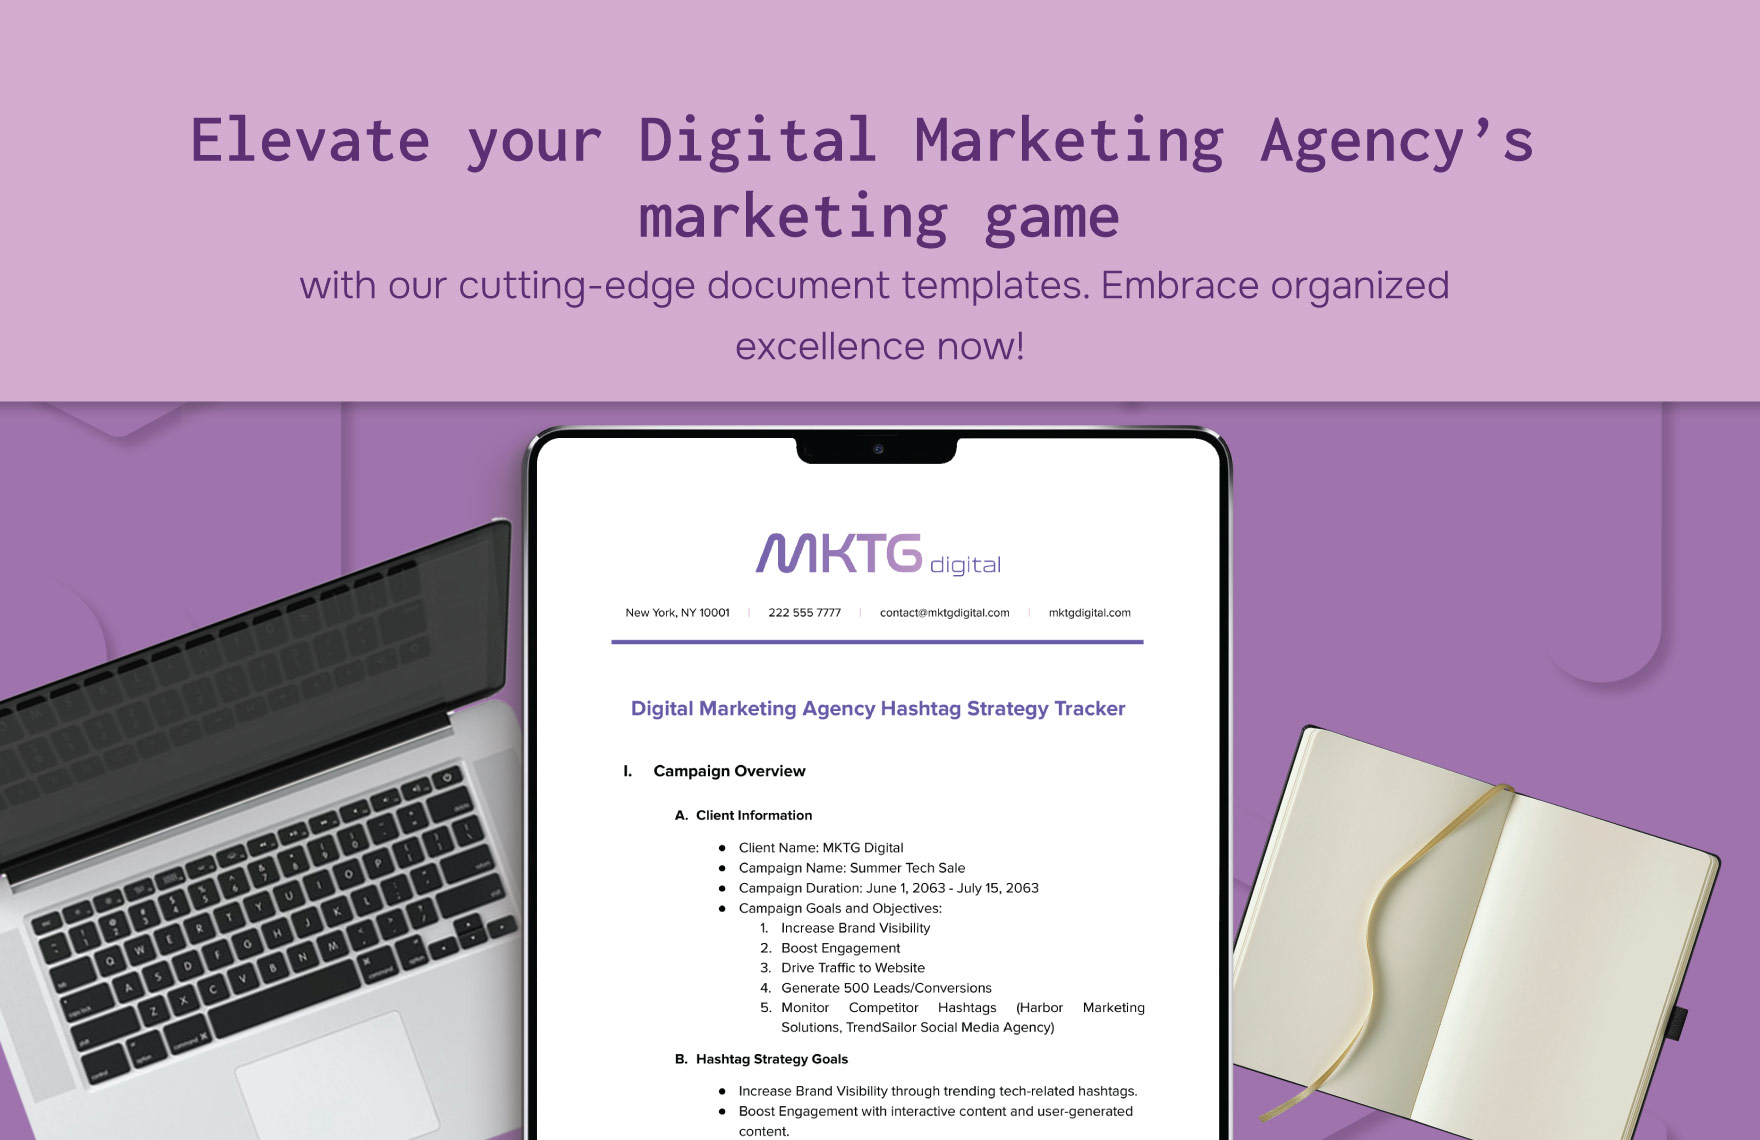 Digital Marketing Agency Hashtag Strategy Tracker Template